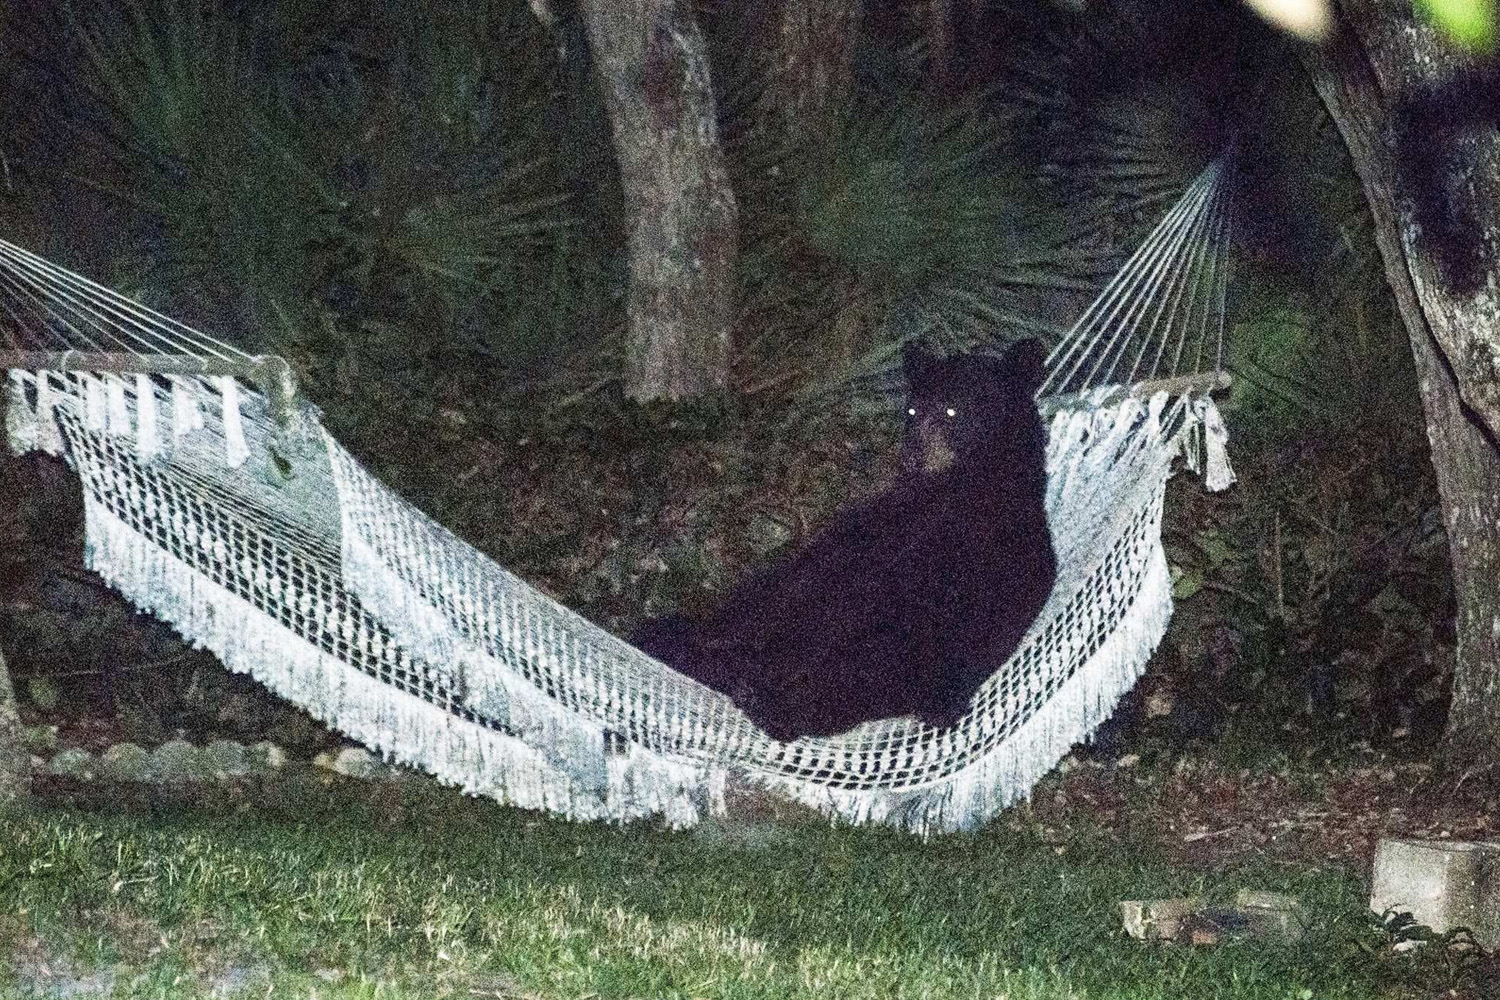 May 30, 2014. A black bear lies on a hammock at a residential back yard in Daytona Beach, Florida.